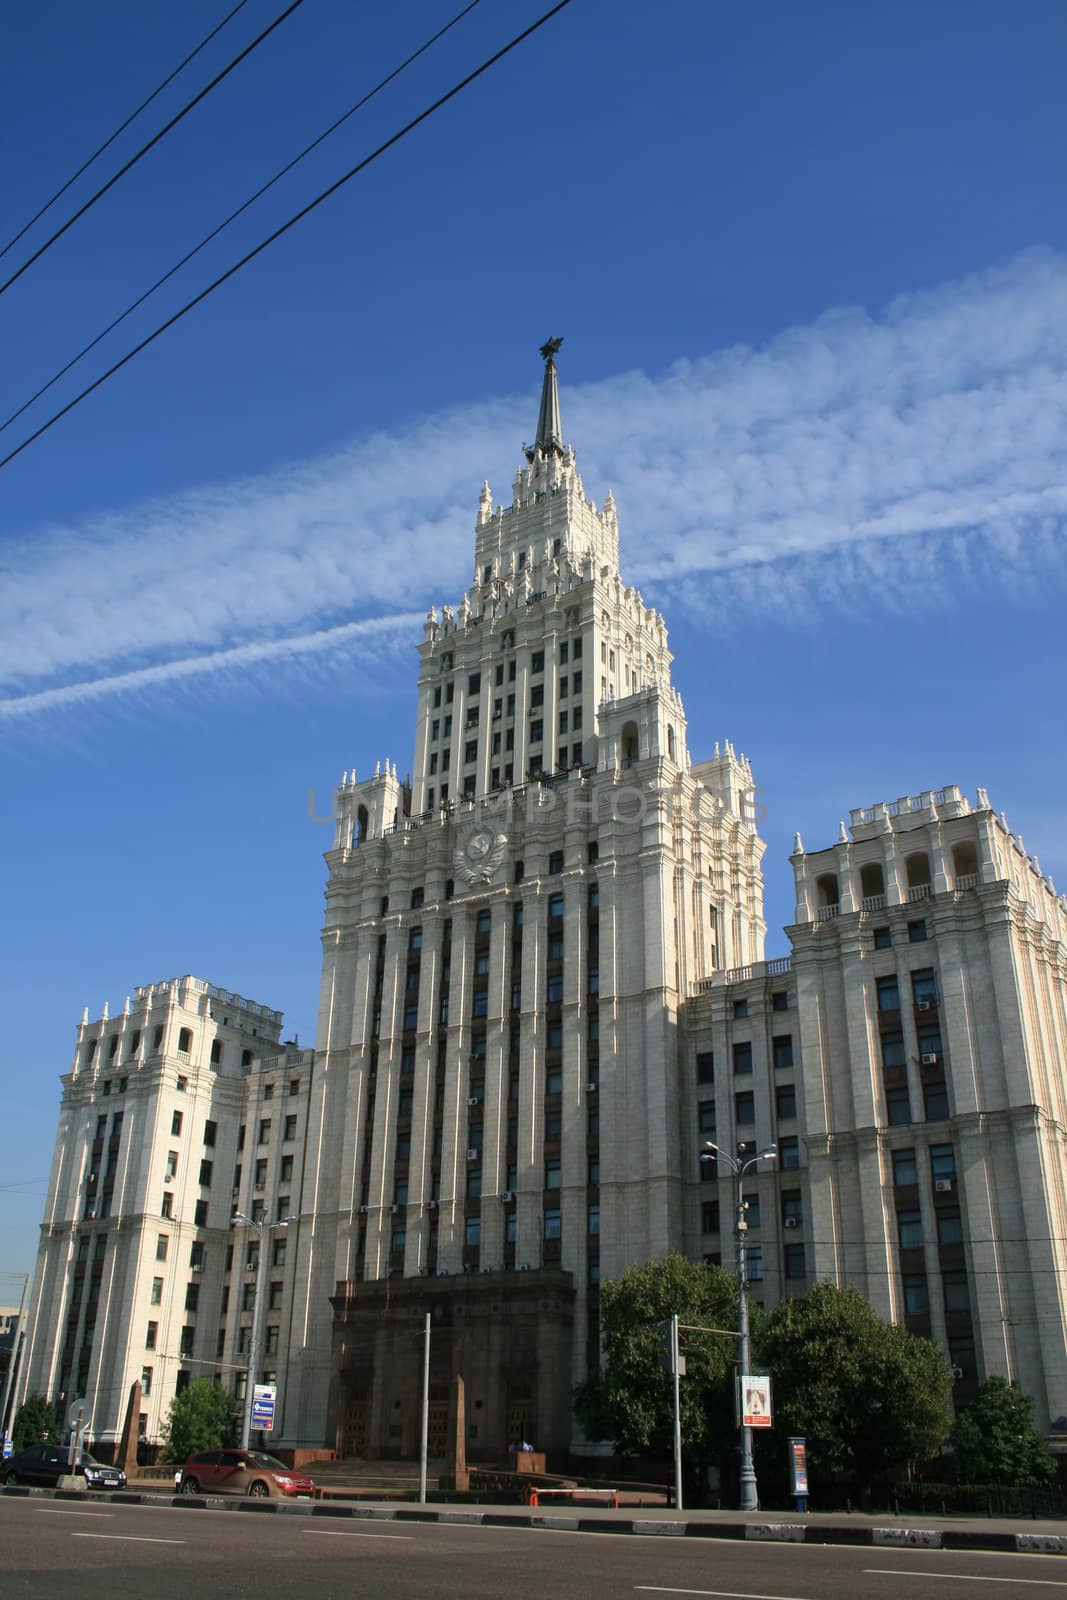 Beautiful skyscraper built during the rule of Stalin